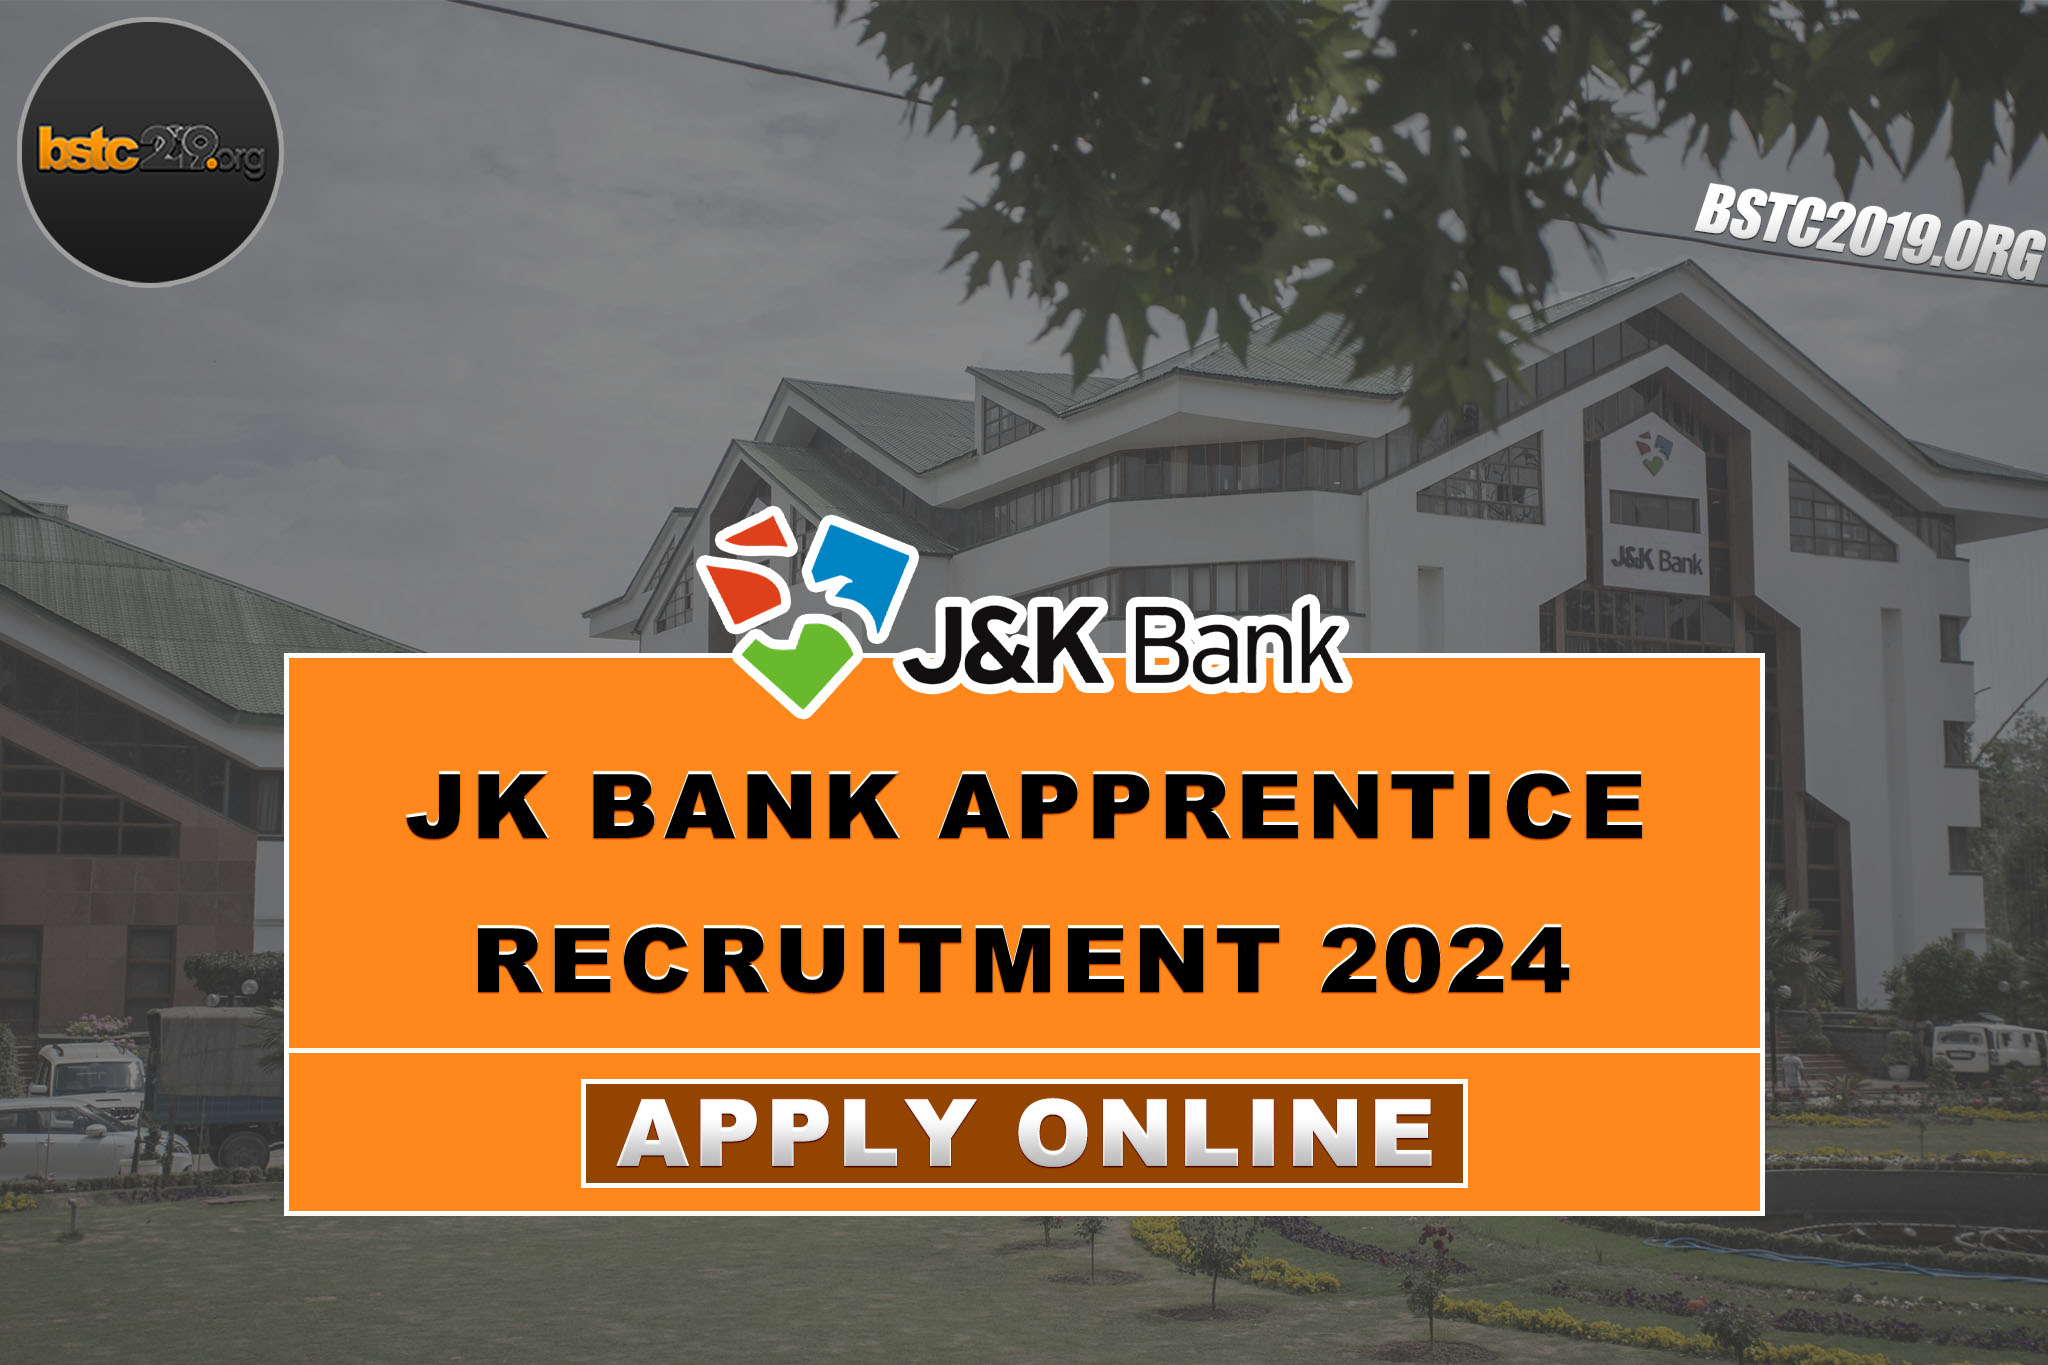 J&K Bank Apprentice Recruitment 2024